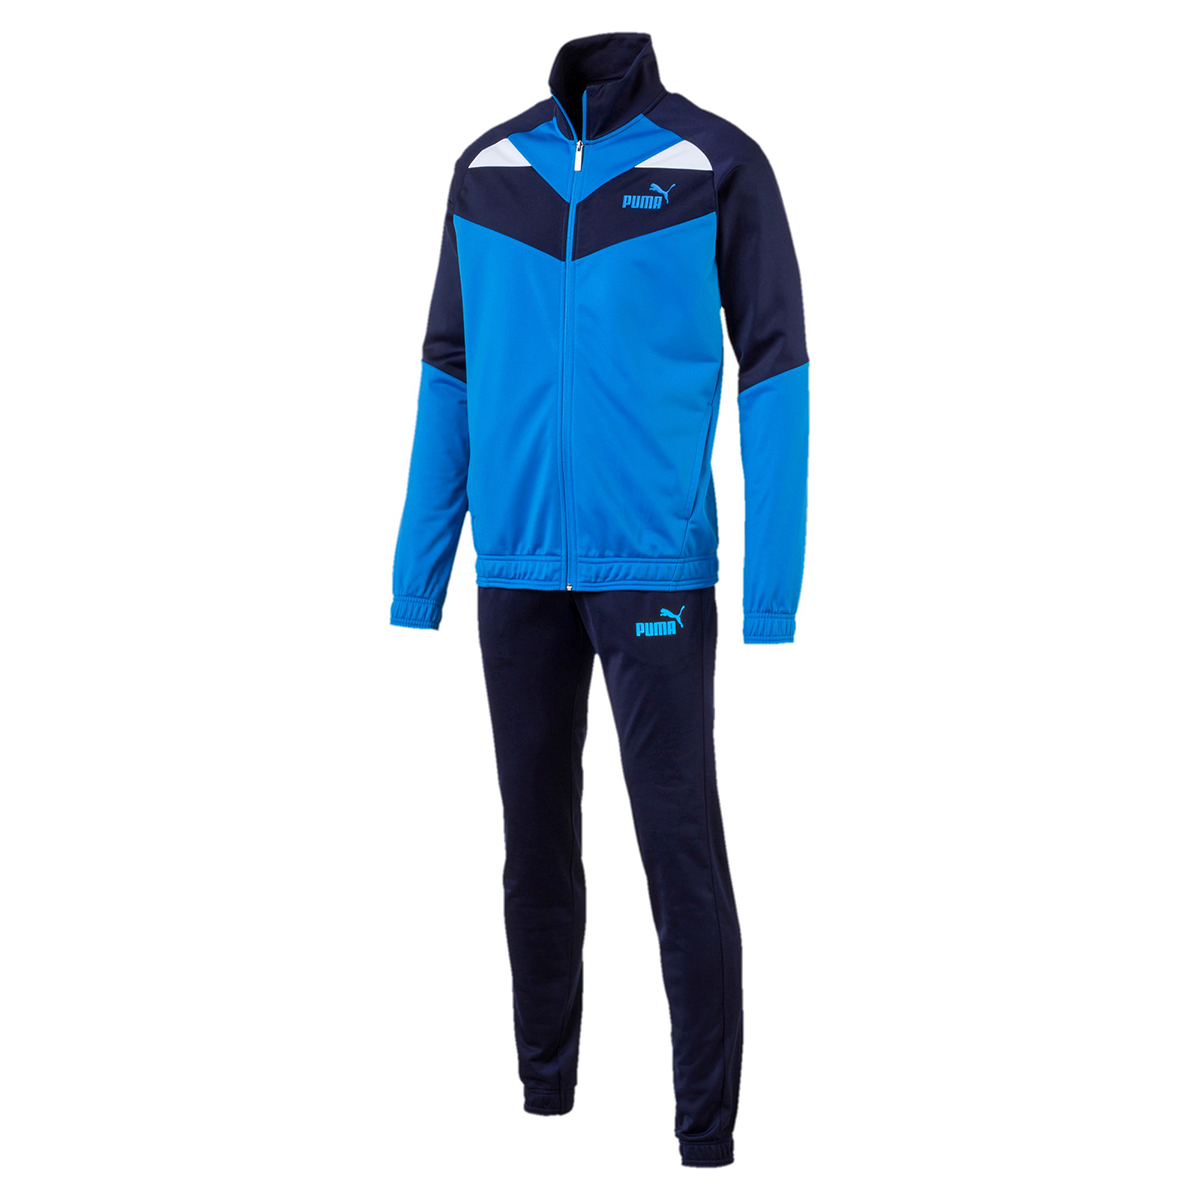 Puma Iconic Tricot Suit CL Trainigsanzug Herren Fußball Sportanzug 851559 blau